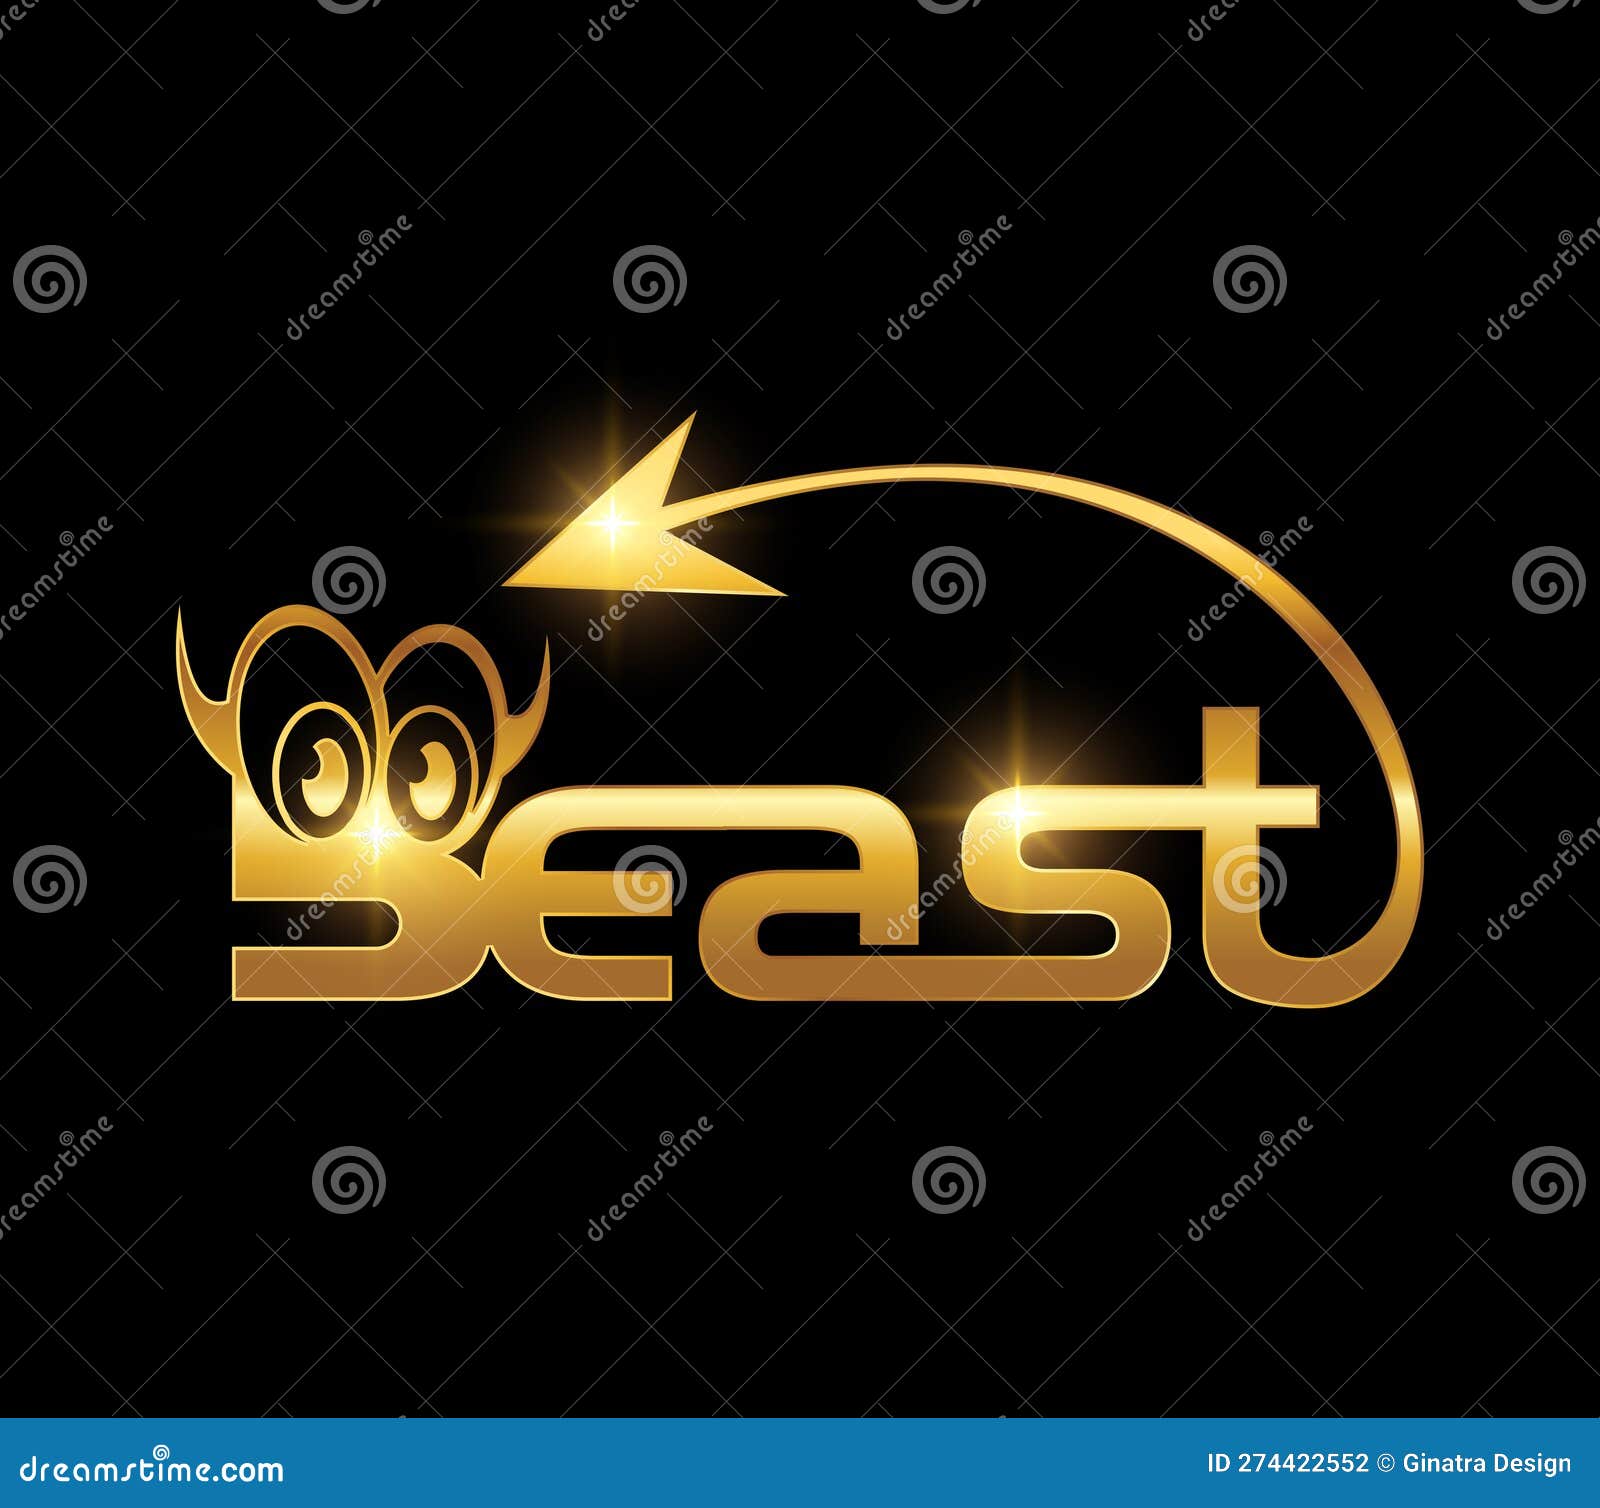 witty-okapi443: mr beast logo